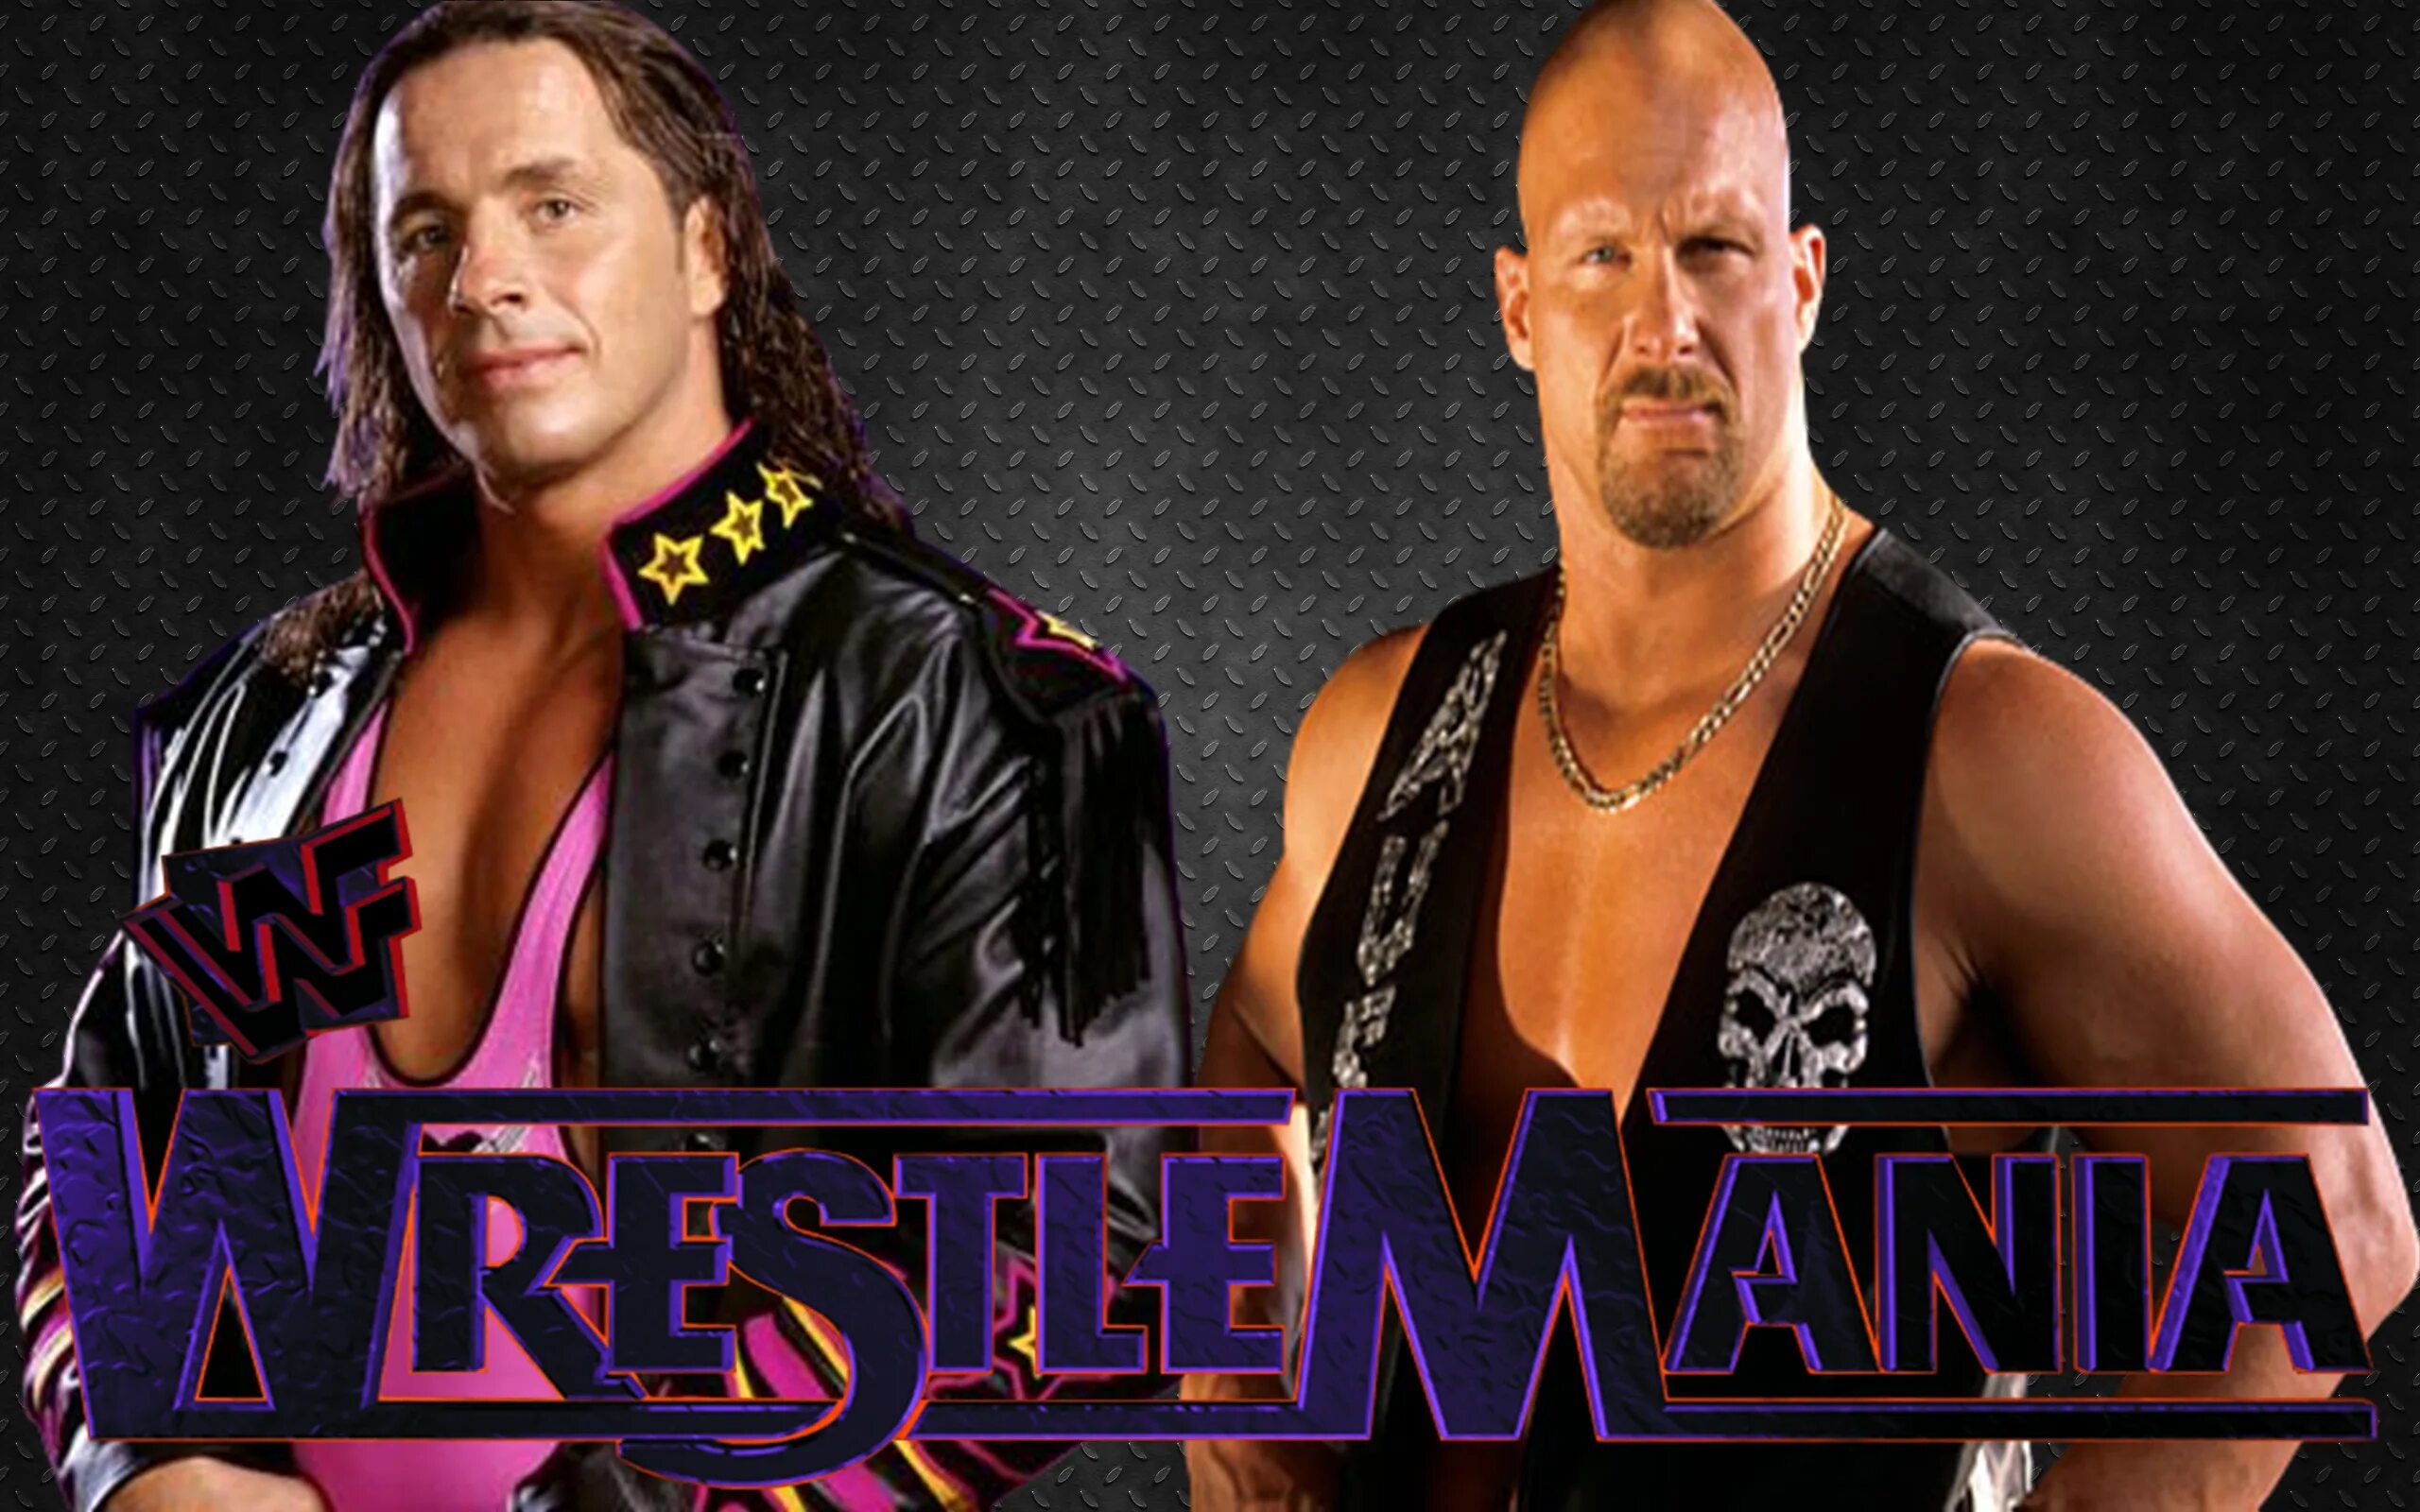 Wwe на русском языке 545. WWE wrestlers. WRESTLEMANIA 13 Bret Hart defeats Steve Austin.